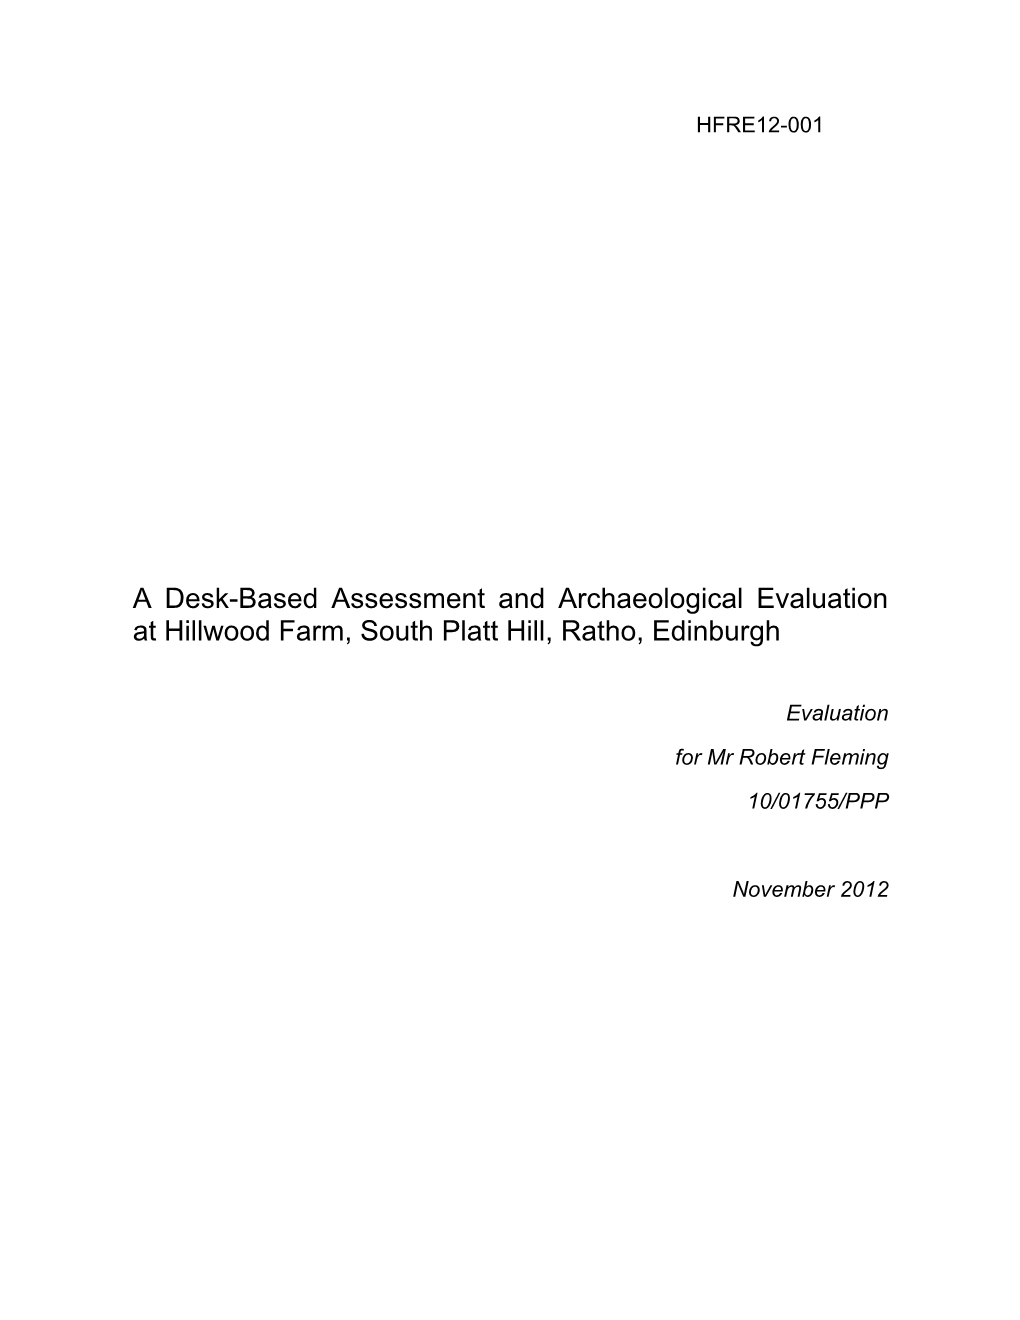 A Desk-Based Assessment and Archaeological Evaluation at Hillwood Farm, South Platt Hill, Ratho, Edinburgh